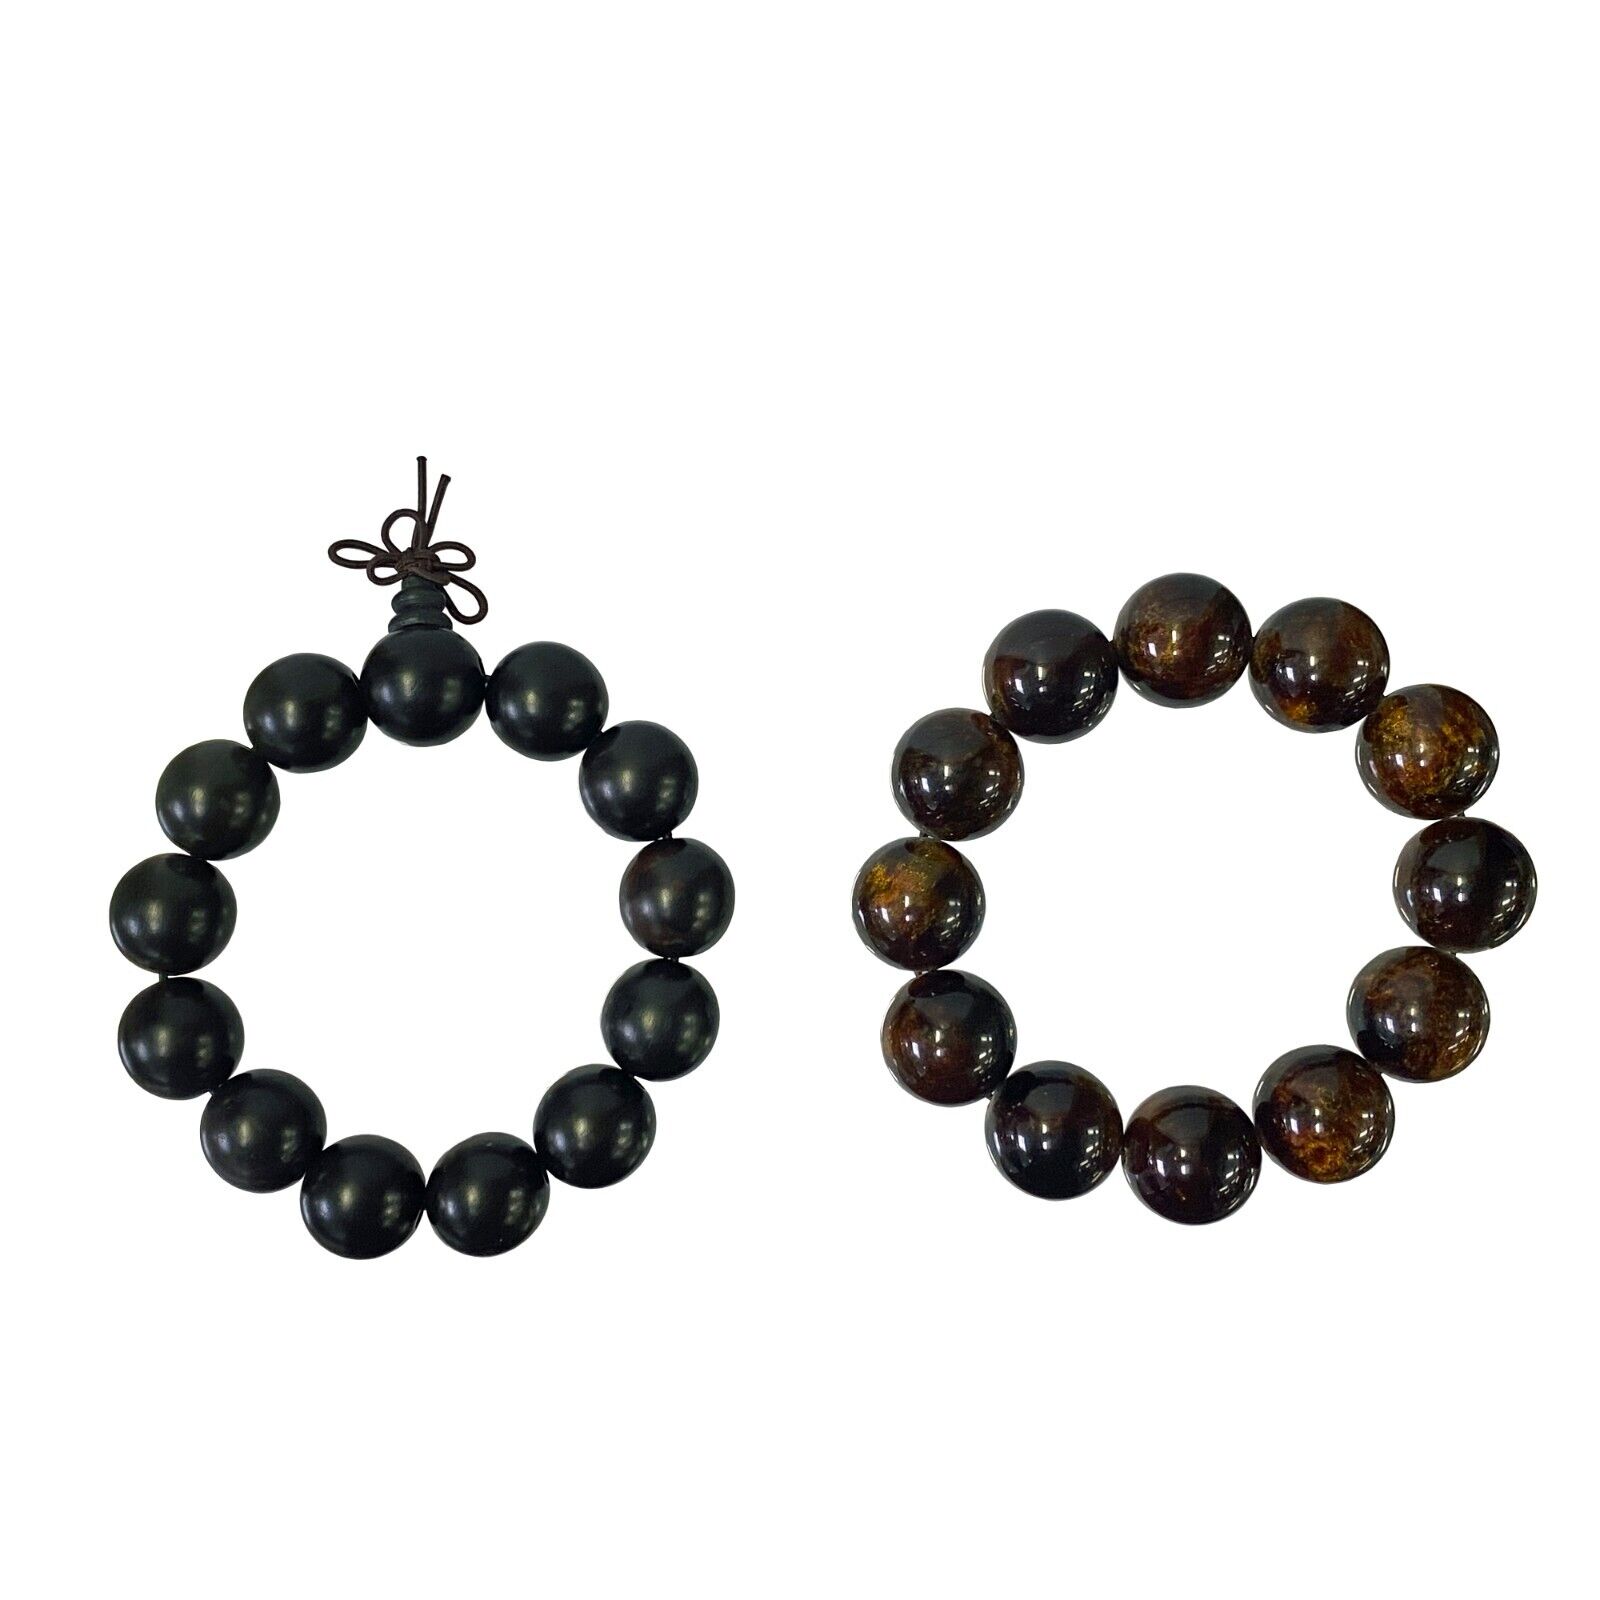 2 Dark Brown Wood / Amber Resin Beads Hand Rosary Praying Bracelet ws3823